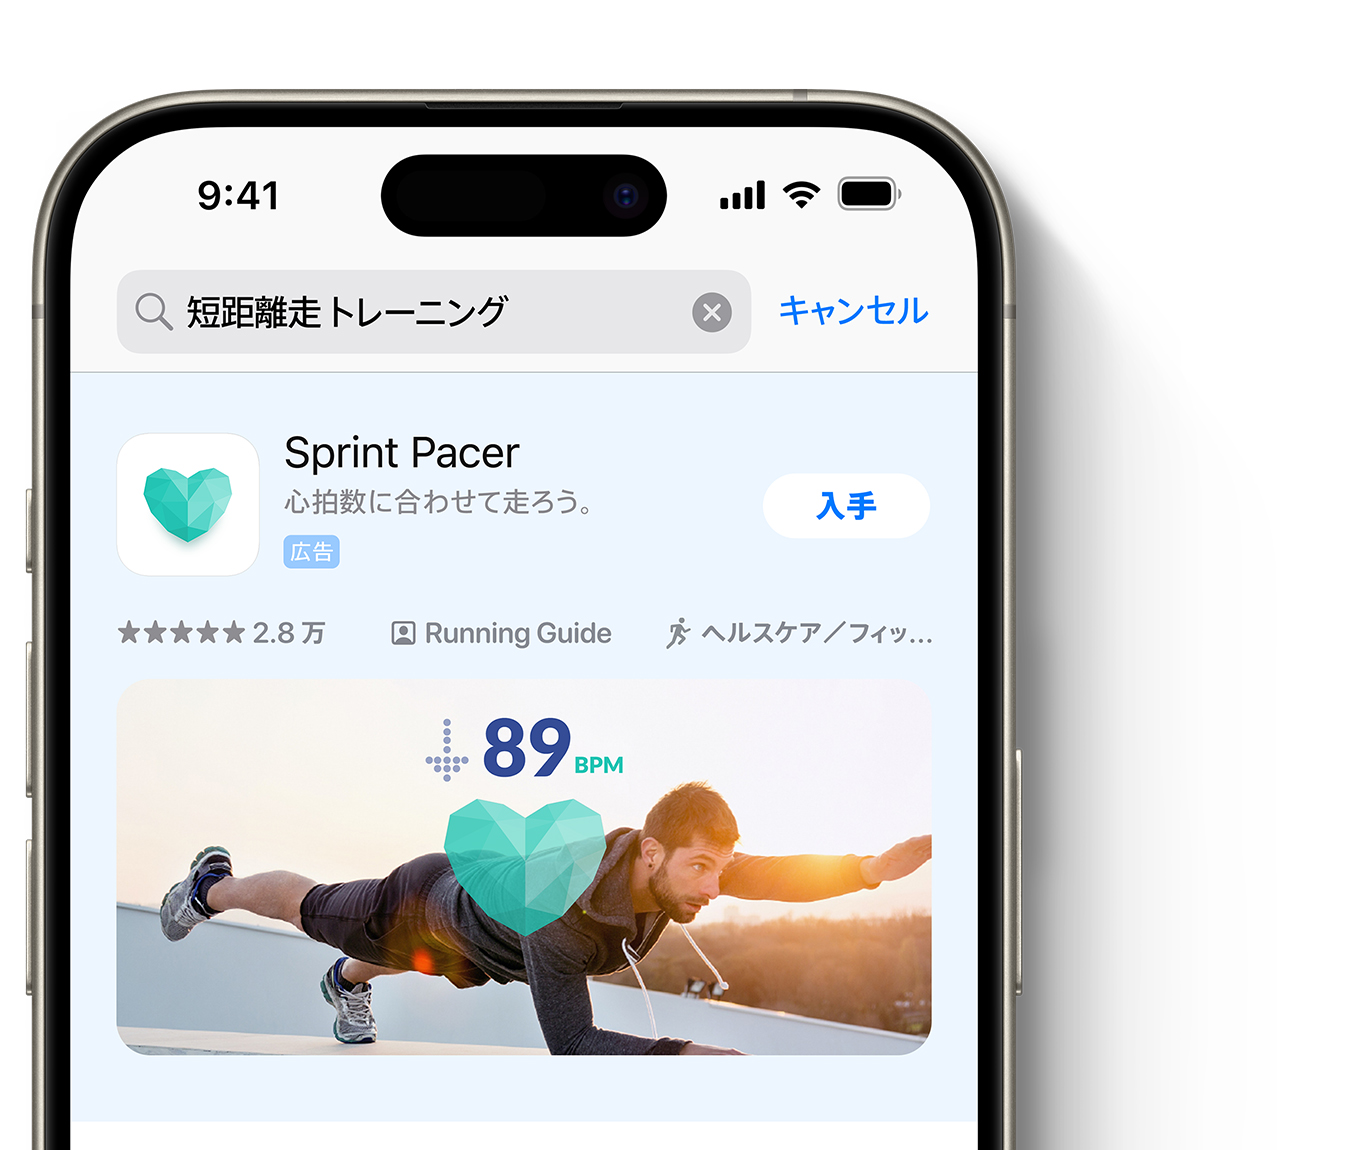 App Storeの検索結果の上部にSprint PacerというAppの広告が表示されている。 